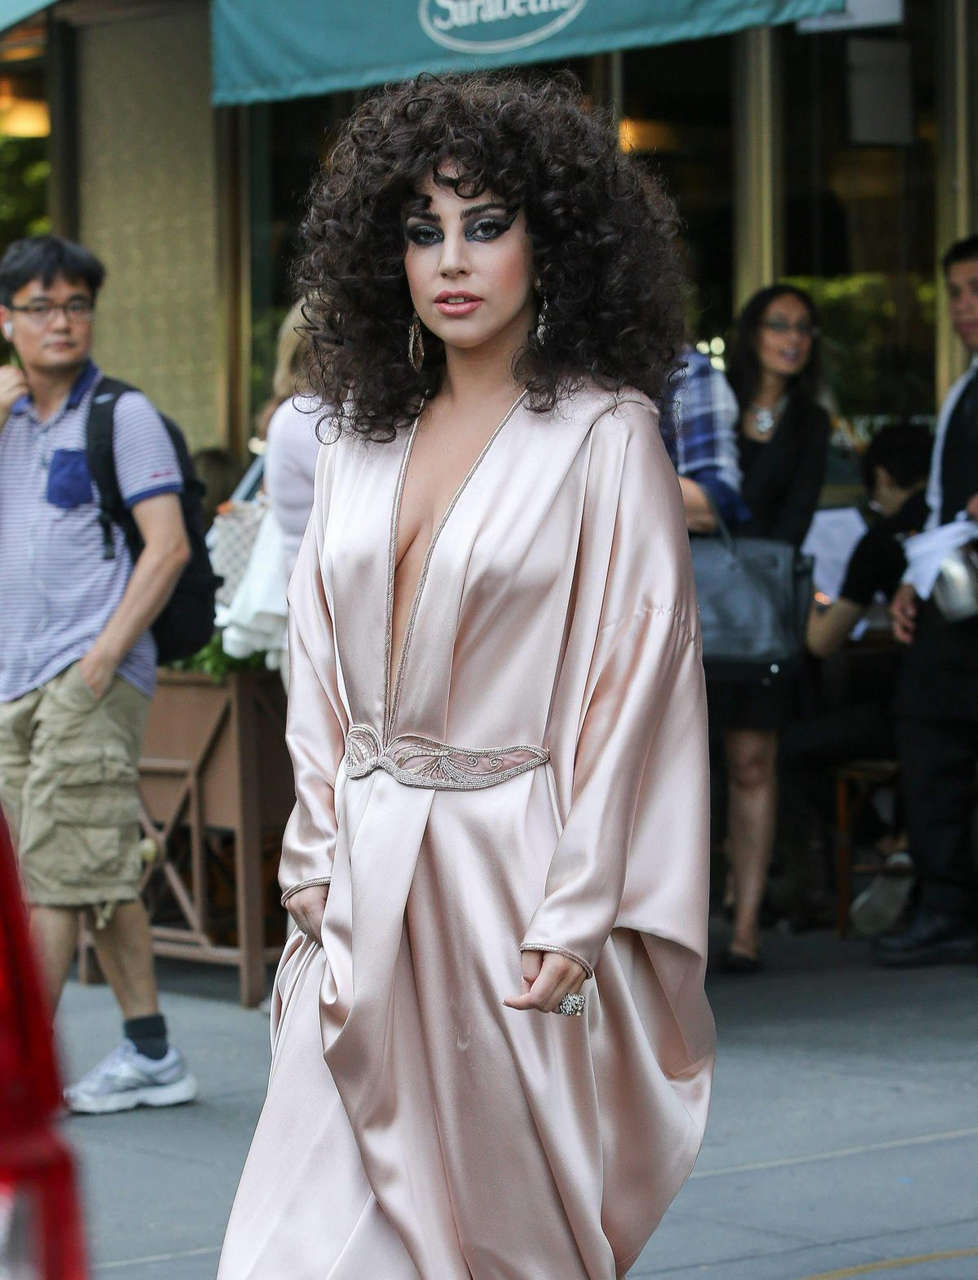 Lady Gaga Leaves Her Apartment New York